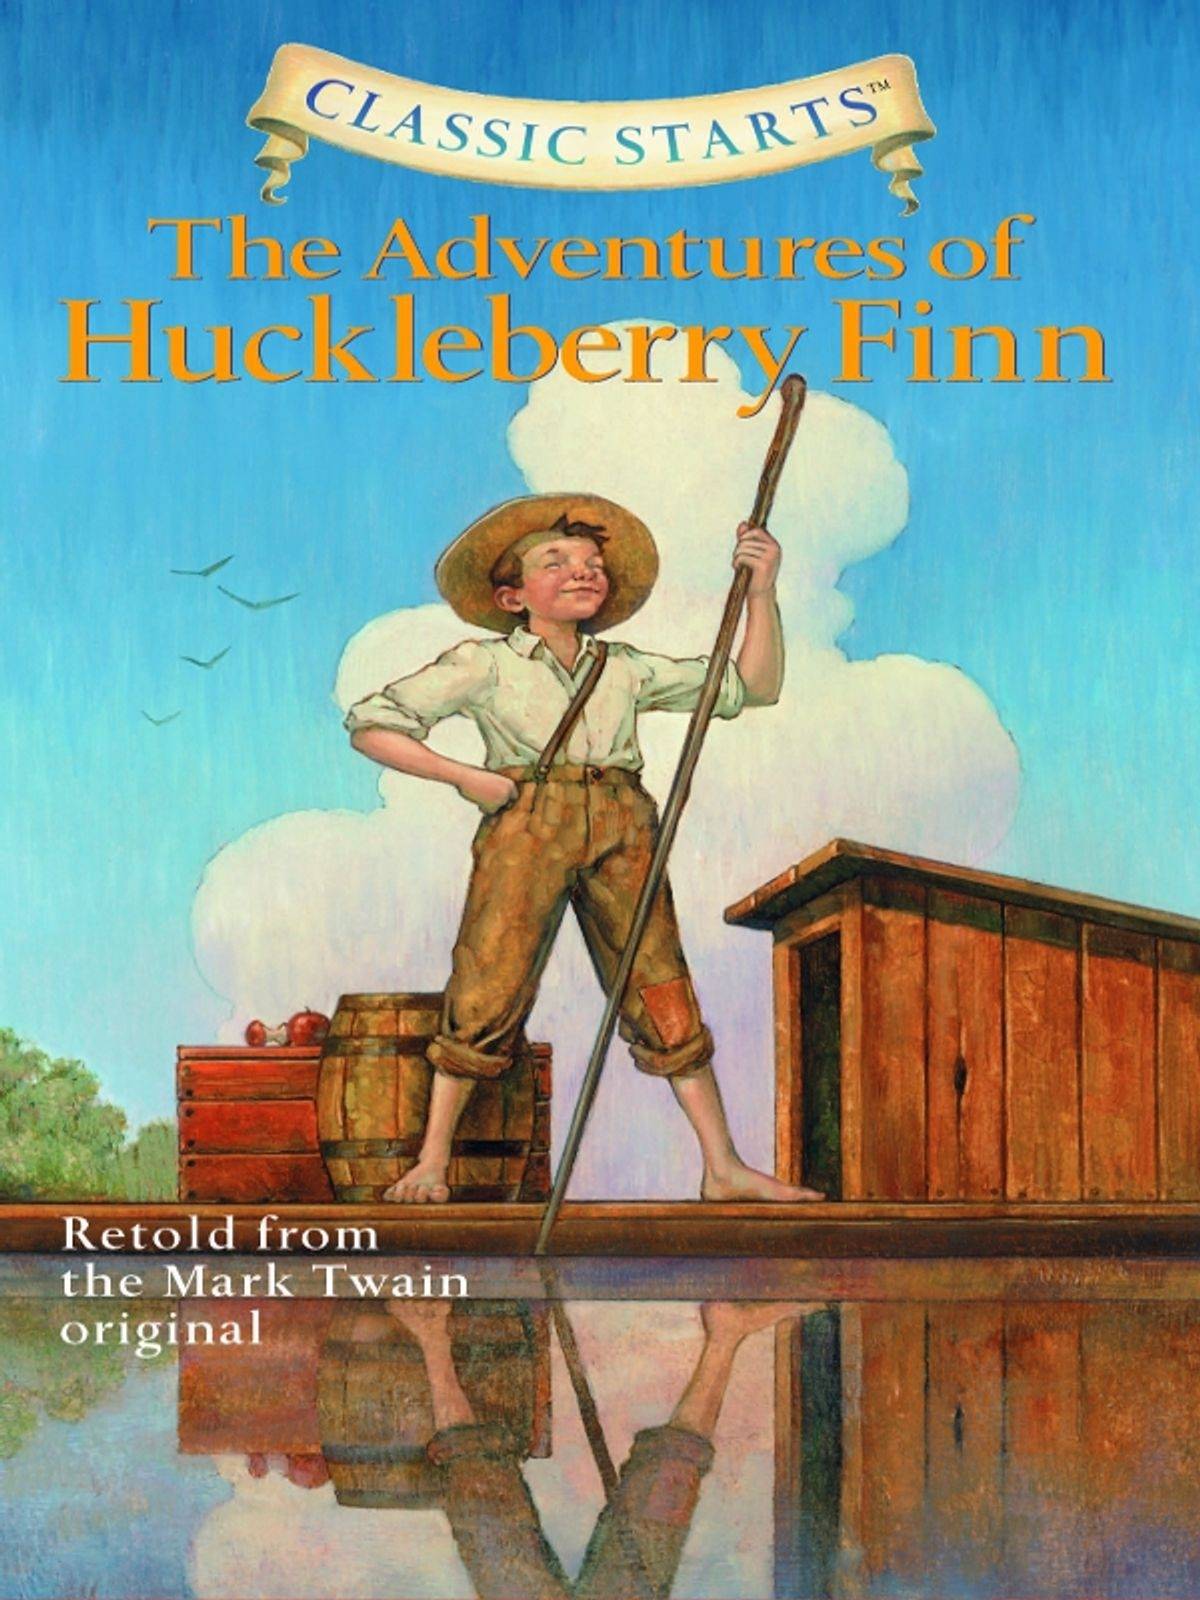 Mark twain wrote the adventures of huckleberry